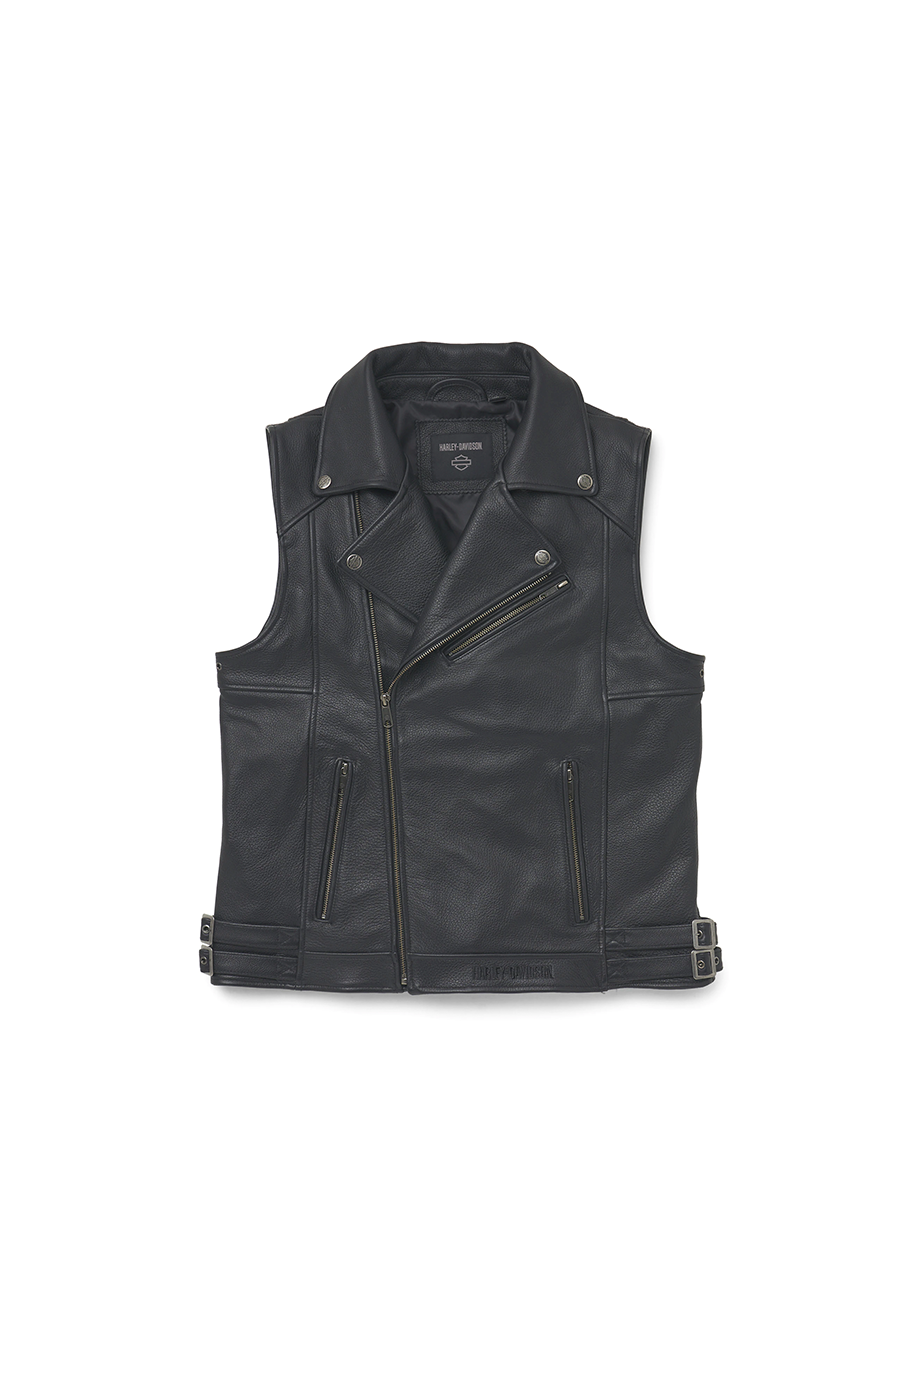 Jacket CasuJacket Casual Erkek Yelek - Harley Davidson Shopal Erkek Yelek -  Kampanyalı Özel Fiyat